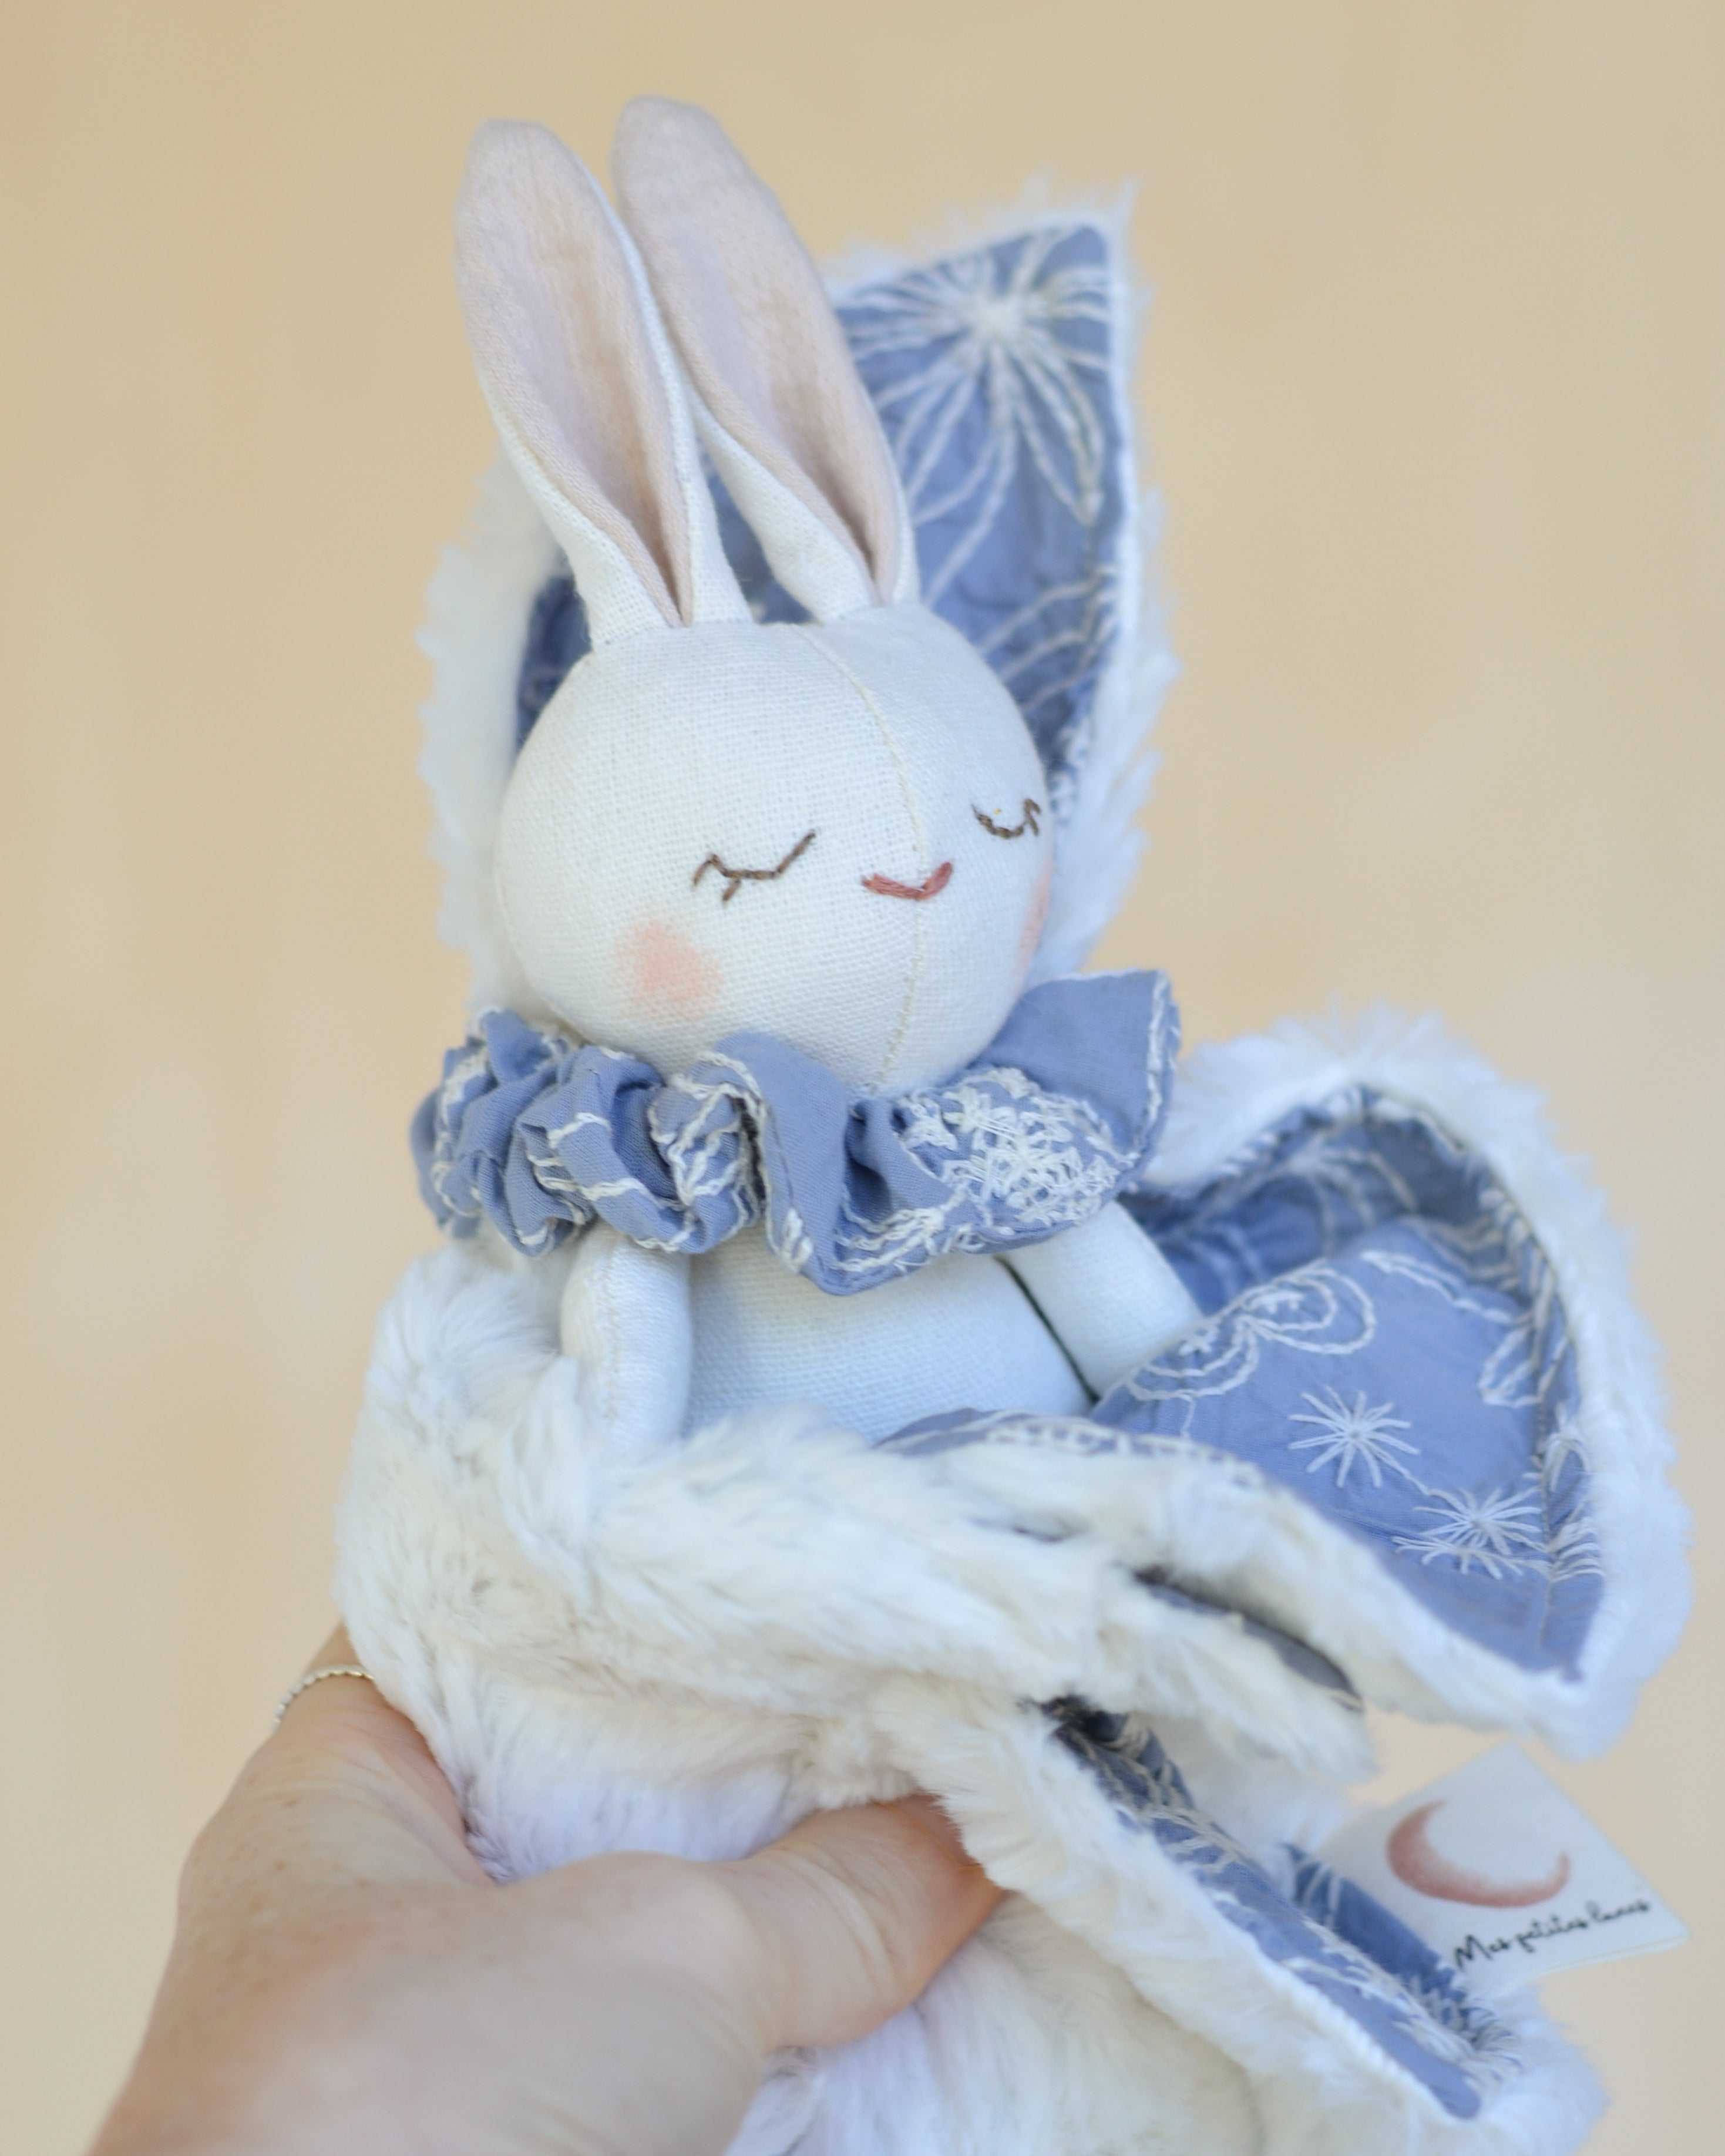 Cuddle bunny lovey